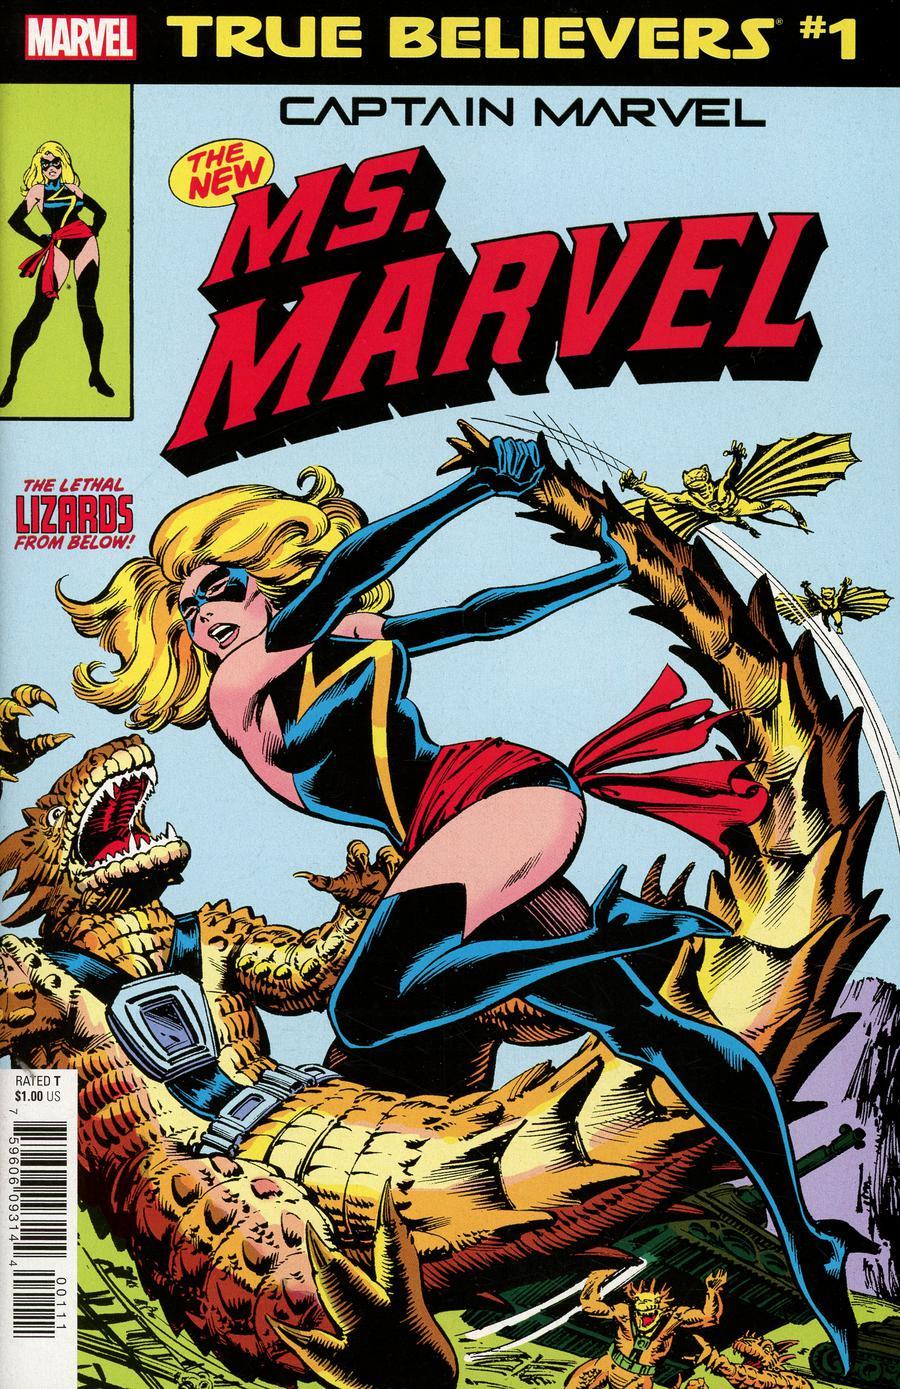 True Believers Captain Marvel New Ms Marvel Vol. 1 #1